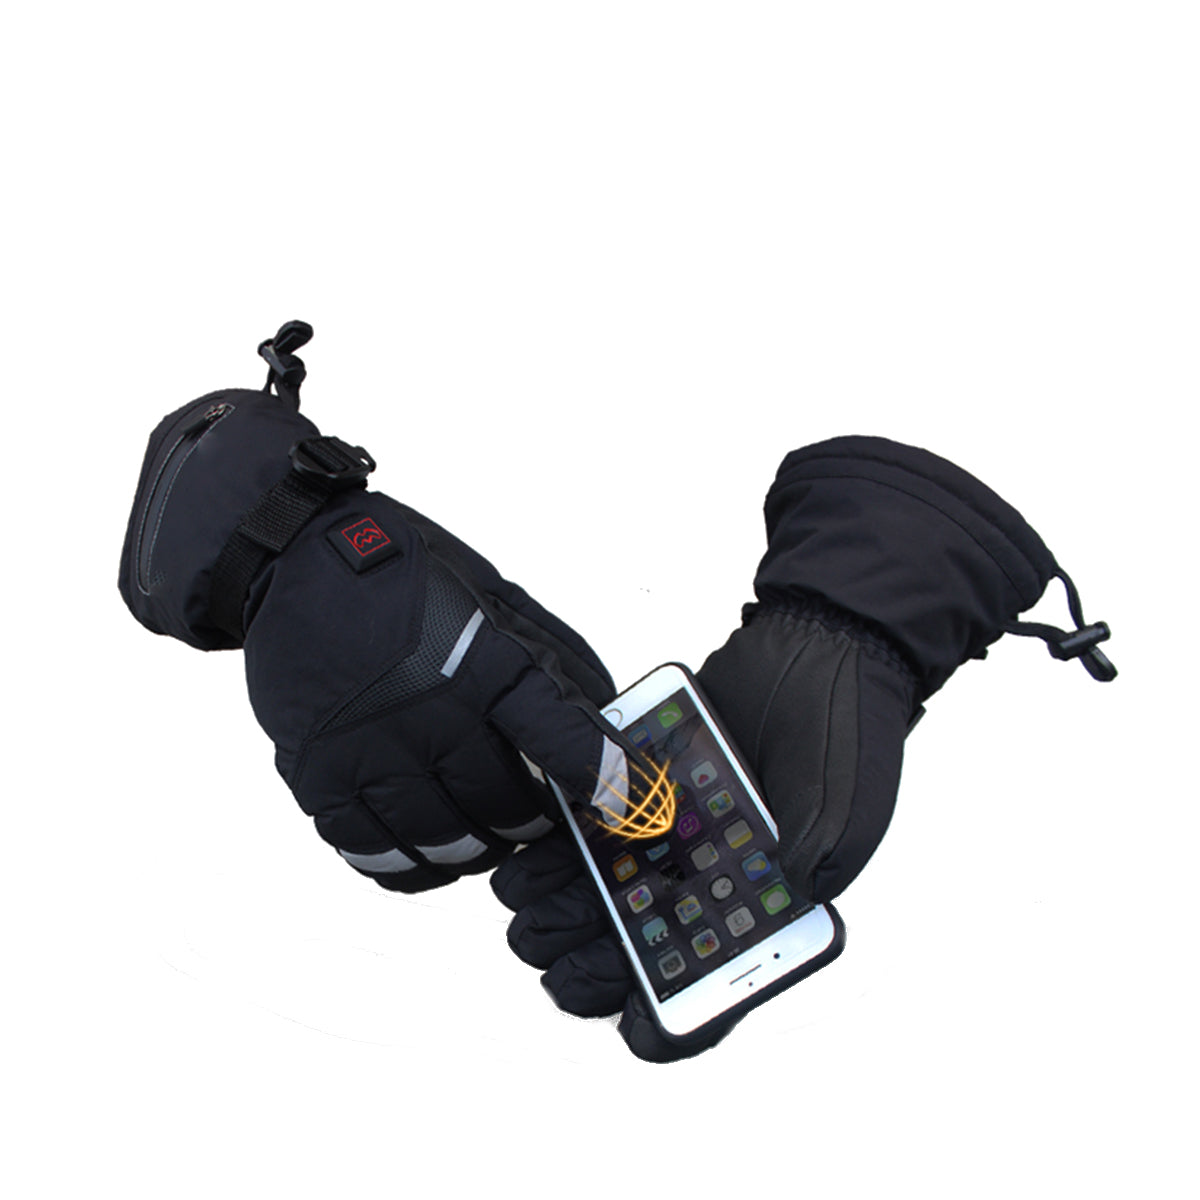 Dark Slate Gray M/L 5 Level Electric Heating Gloves Outdoor Skiing Waterproof Winter Heated Hand Warmer Non-slip